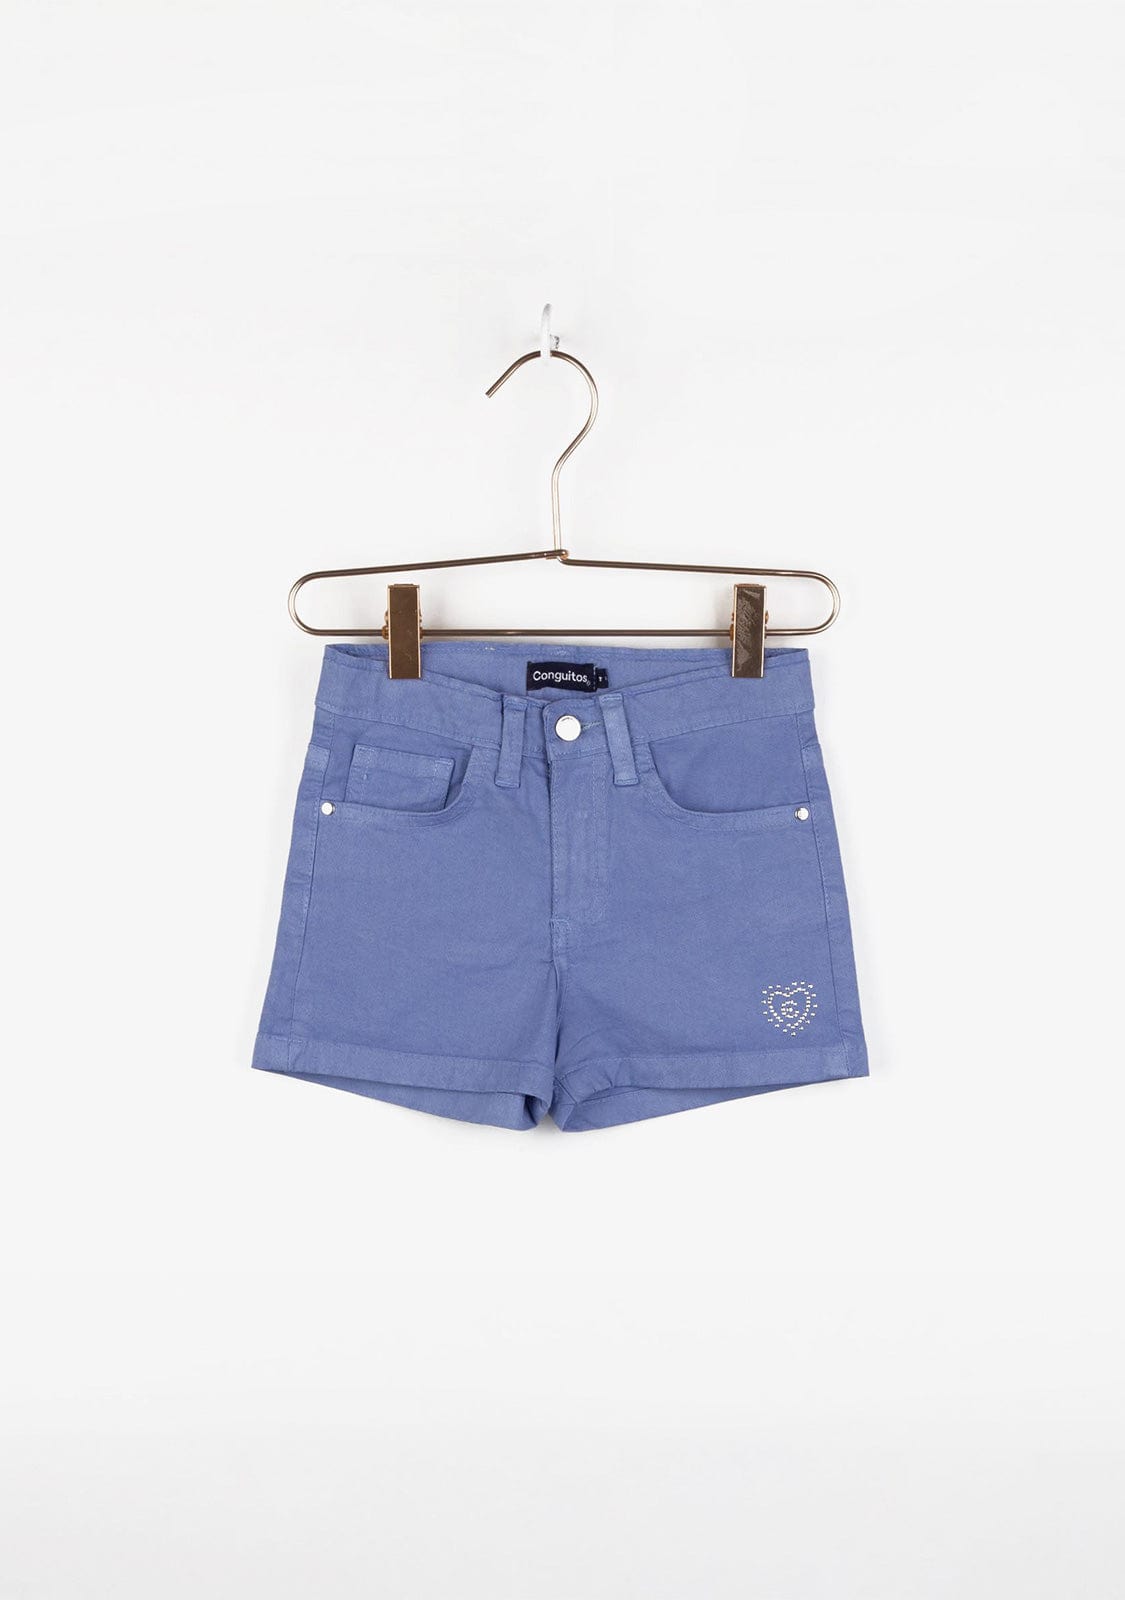 CONGUITOS TEXTIL Clothing Girl's Light Blue Basic Shorts